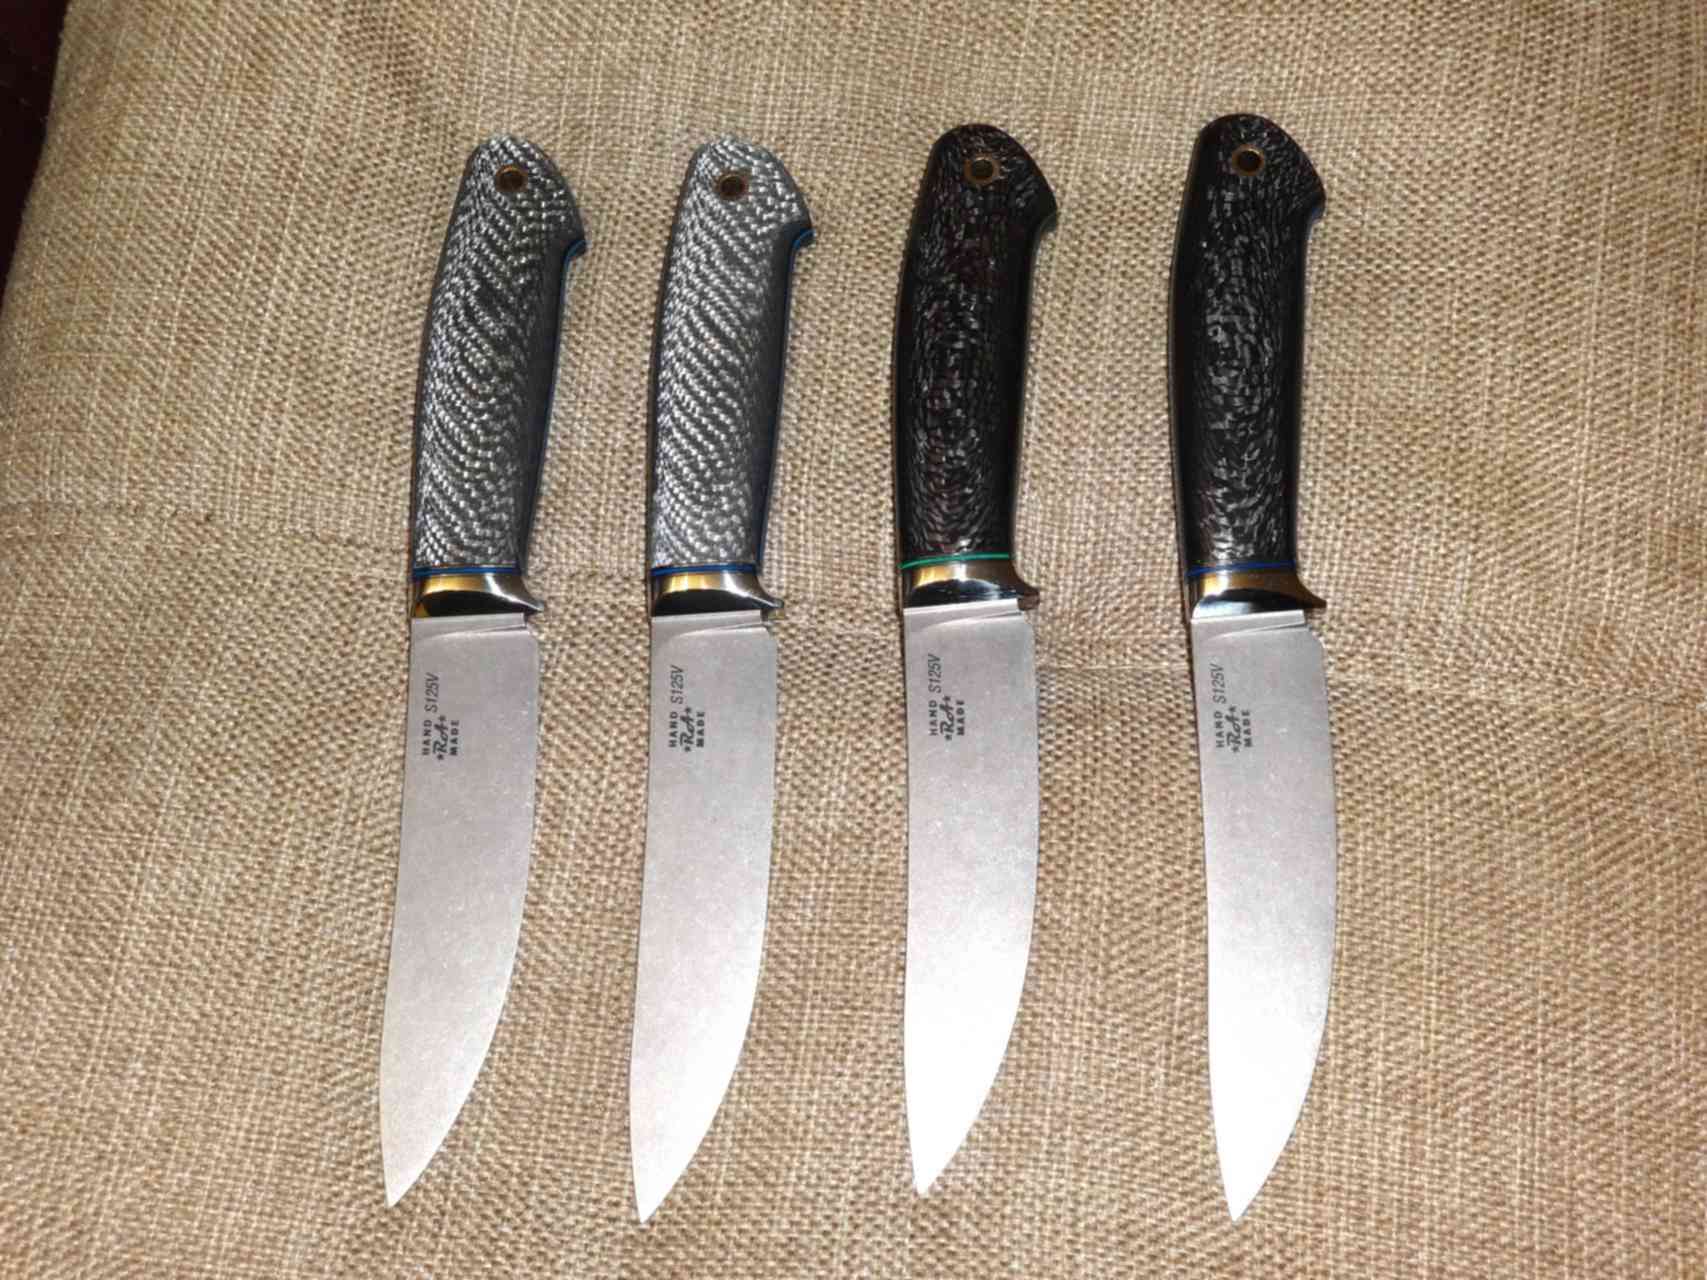 Купить нож 7 ножей. Нож ra сталь s125v. Нож охотничий сталь 125v. Нож Emerson, карбон s125. Японский нож s390.